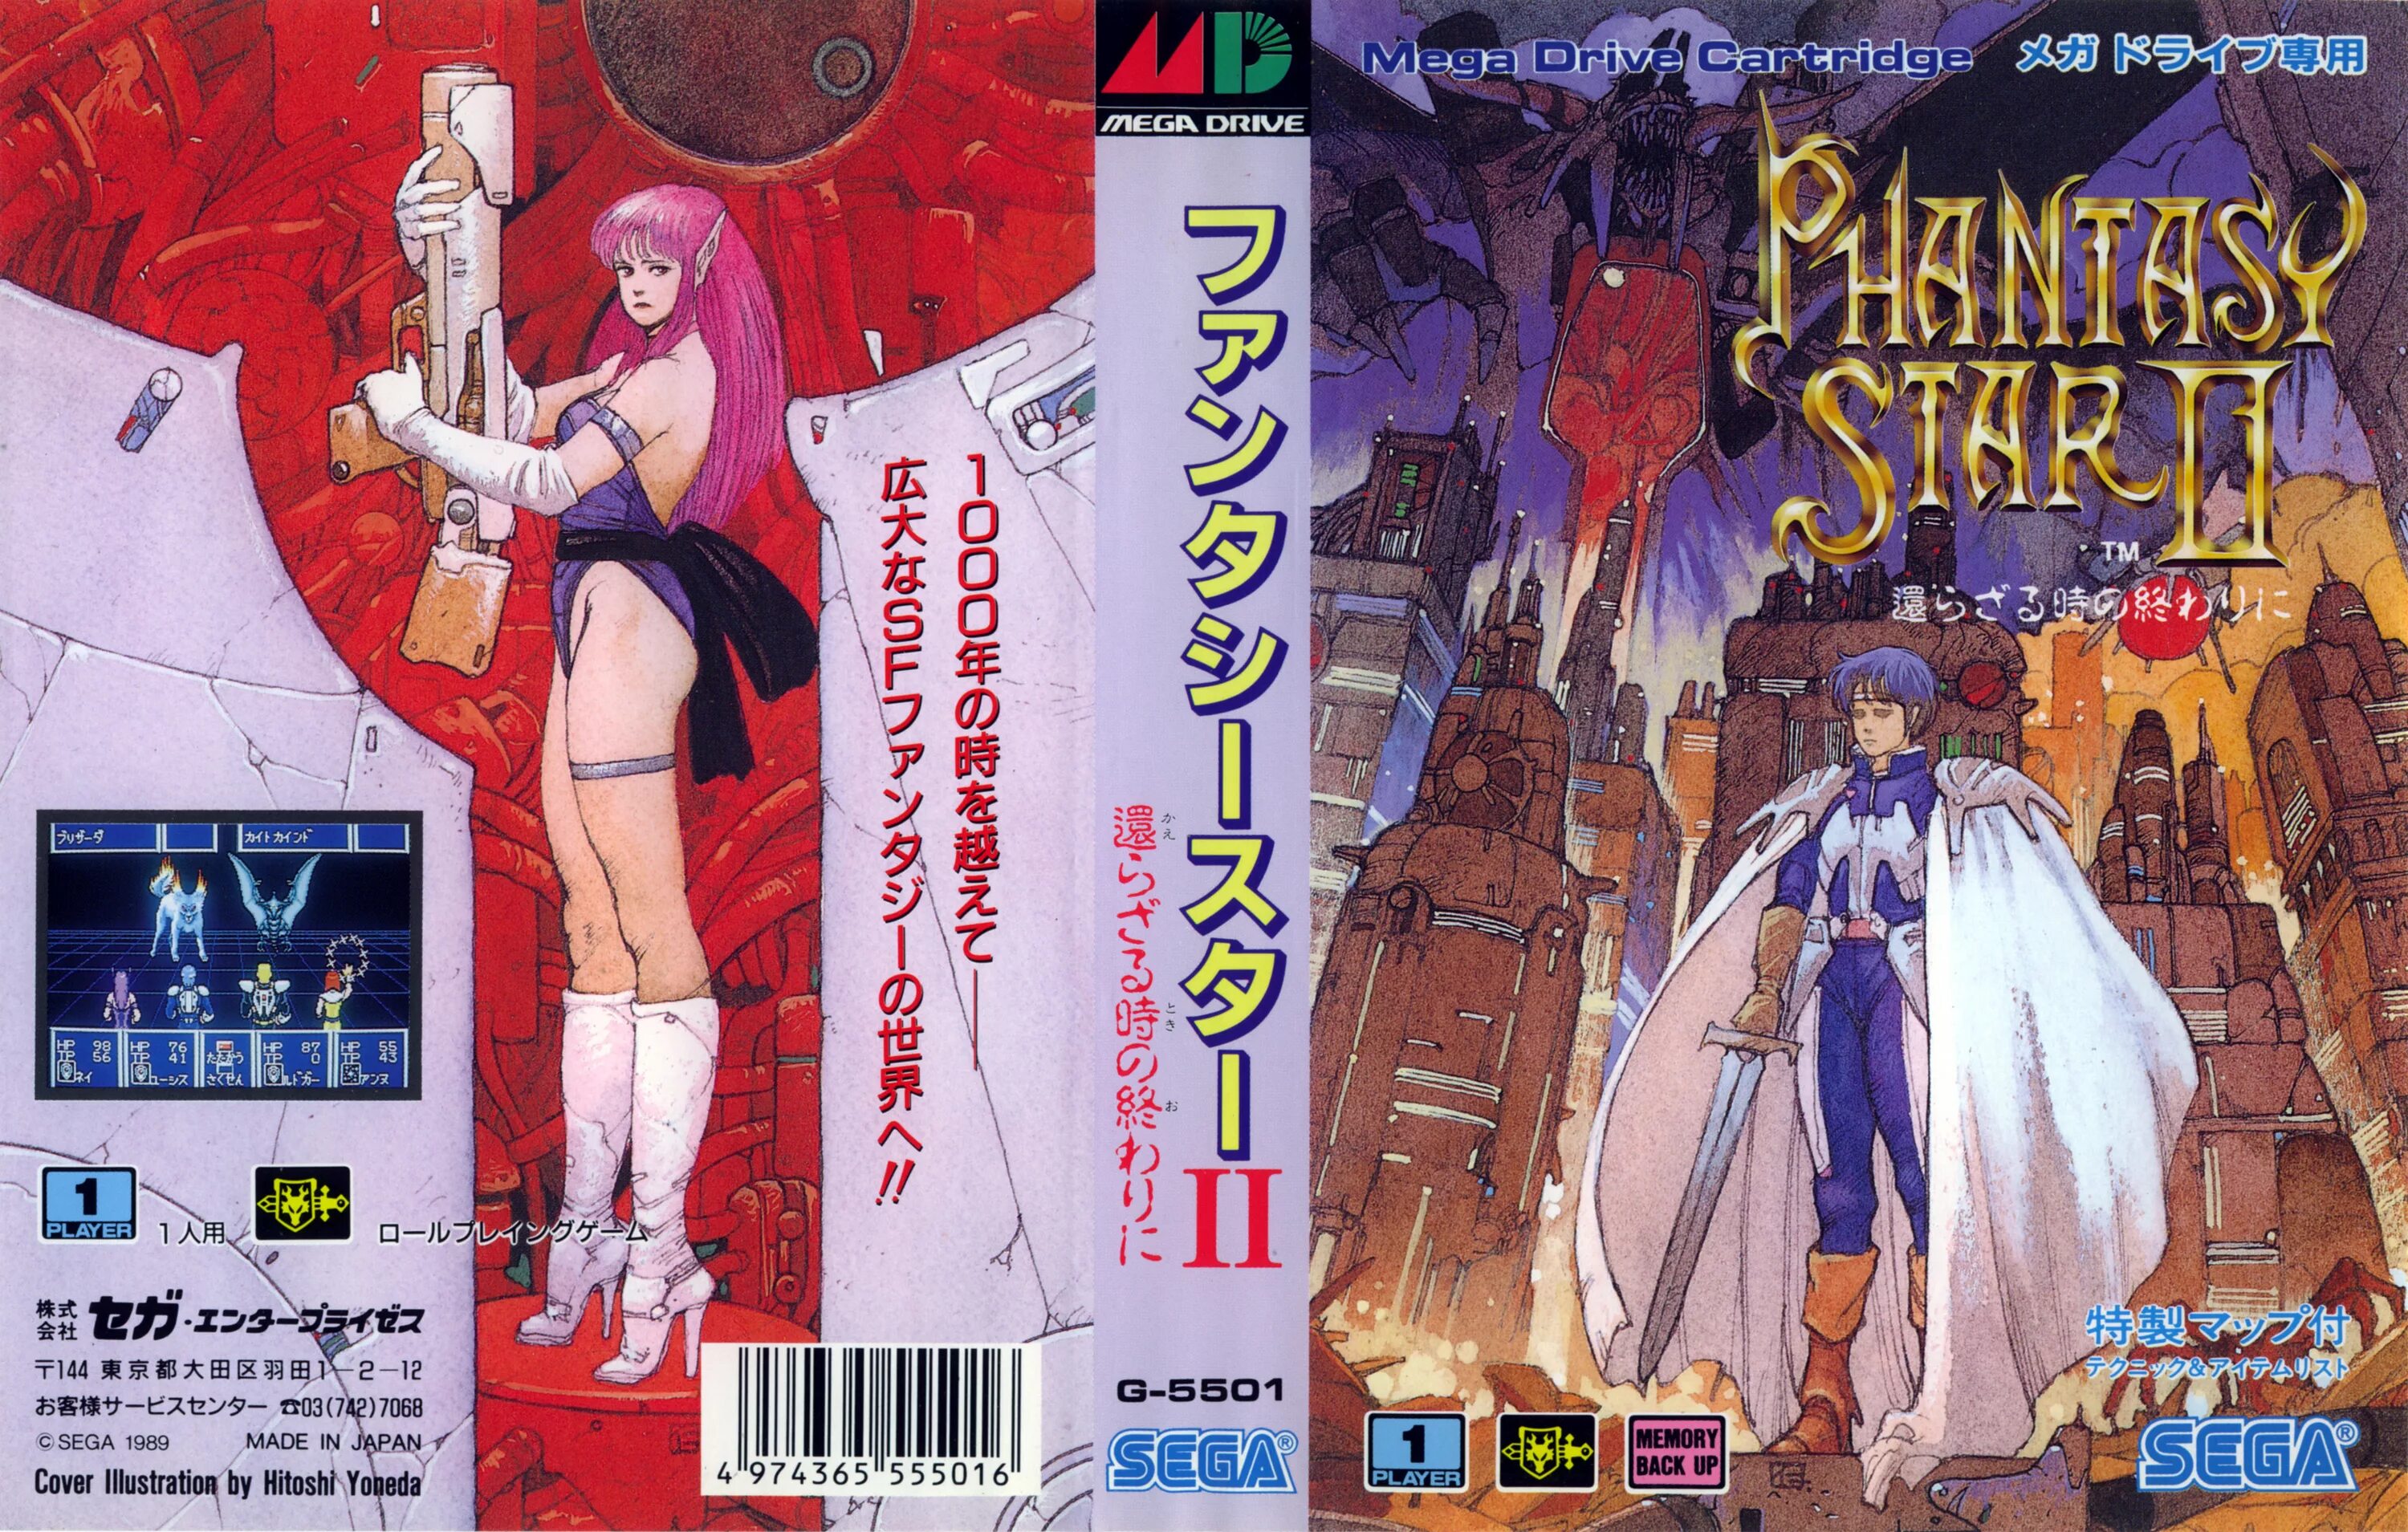 Jap 2. Phantasy Star 2 обложка. Phantasy Star 2 Sega обложка. Phantasy Star 4 обложка. Phantasy Star Sega Mega Drive.